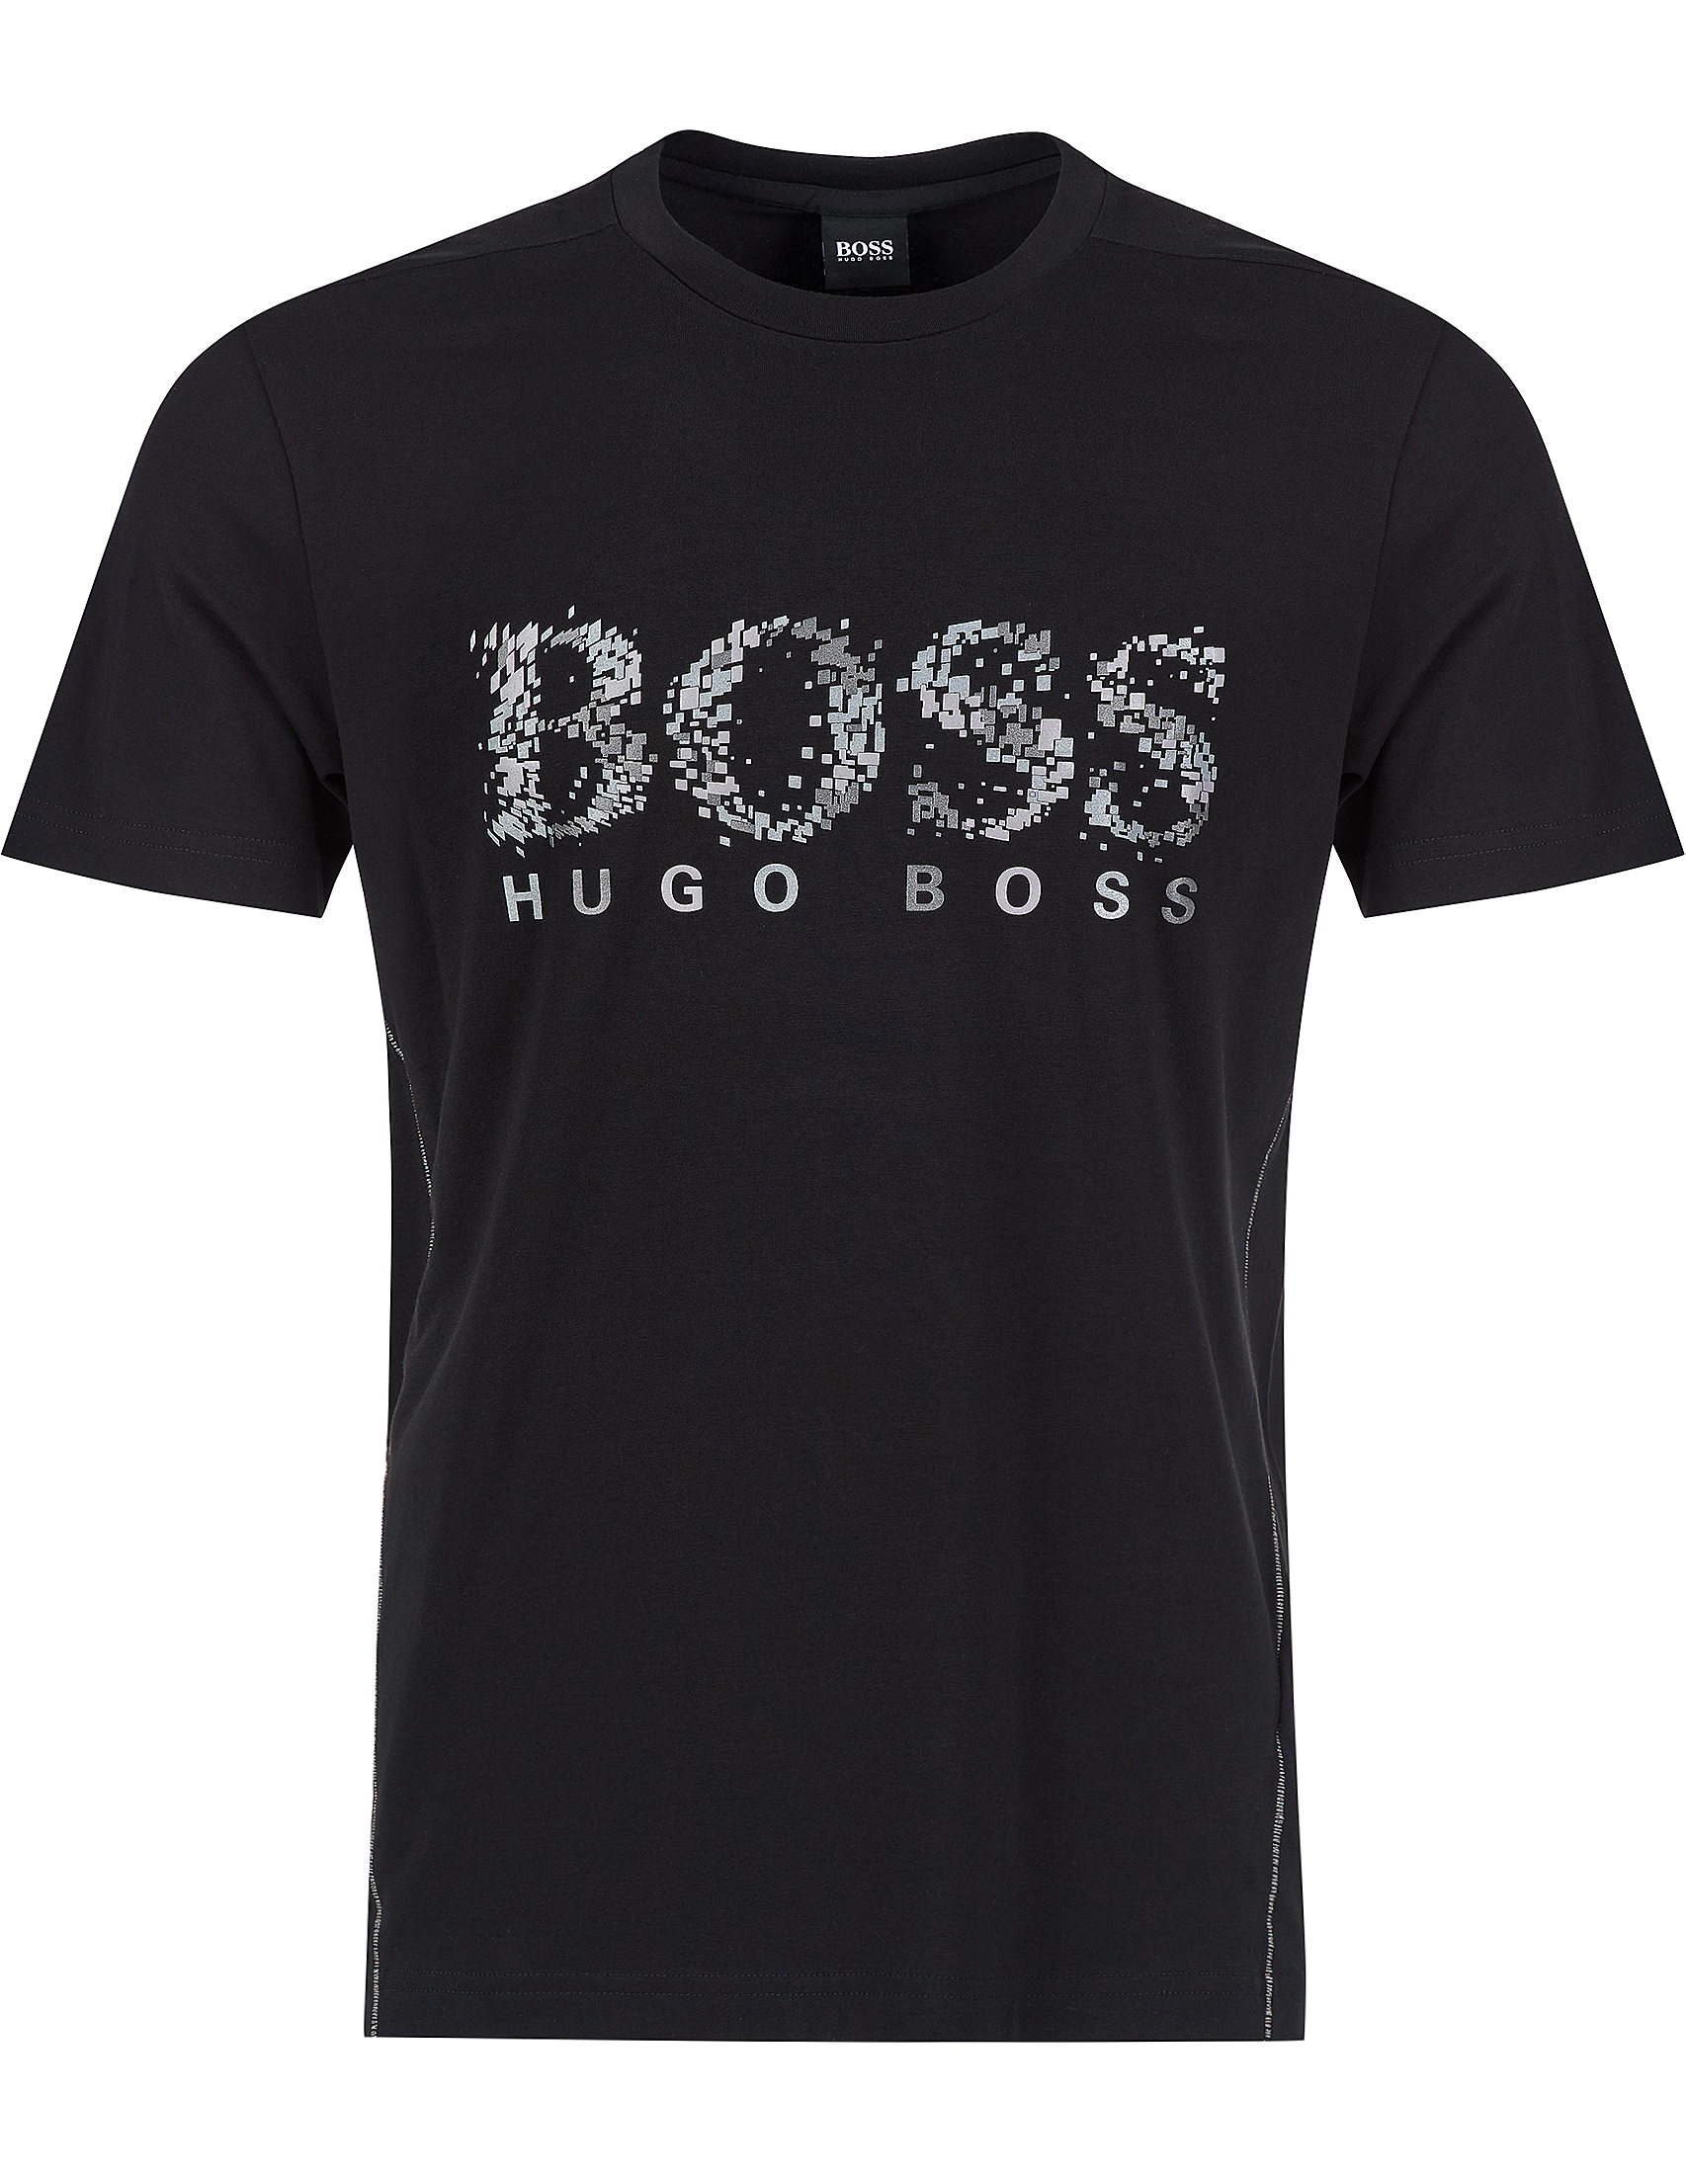 Хьюго босс мужские футболки